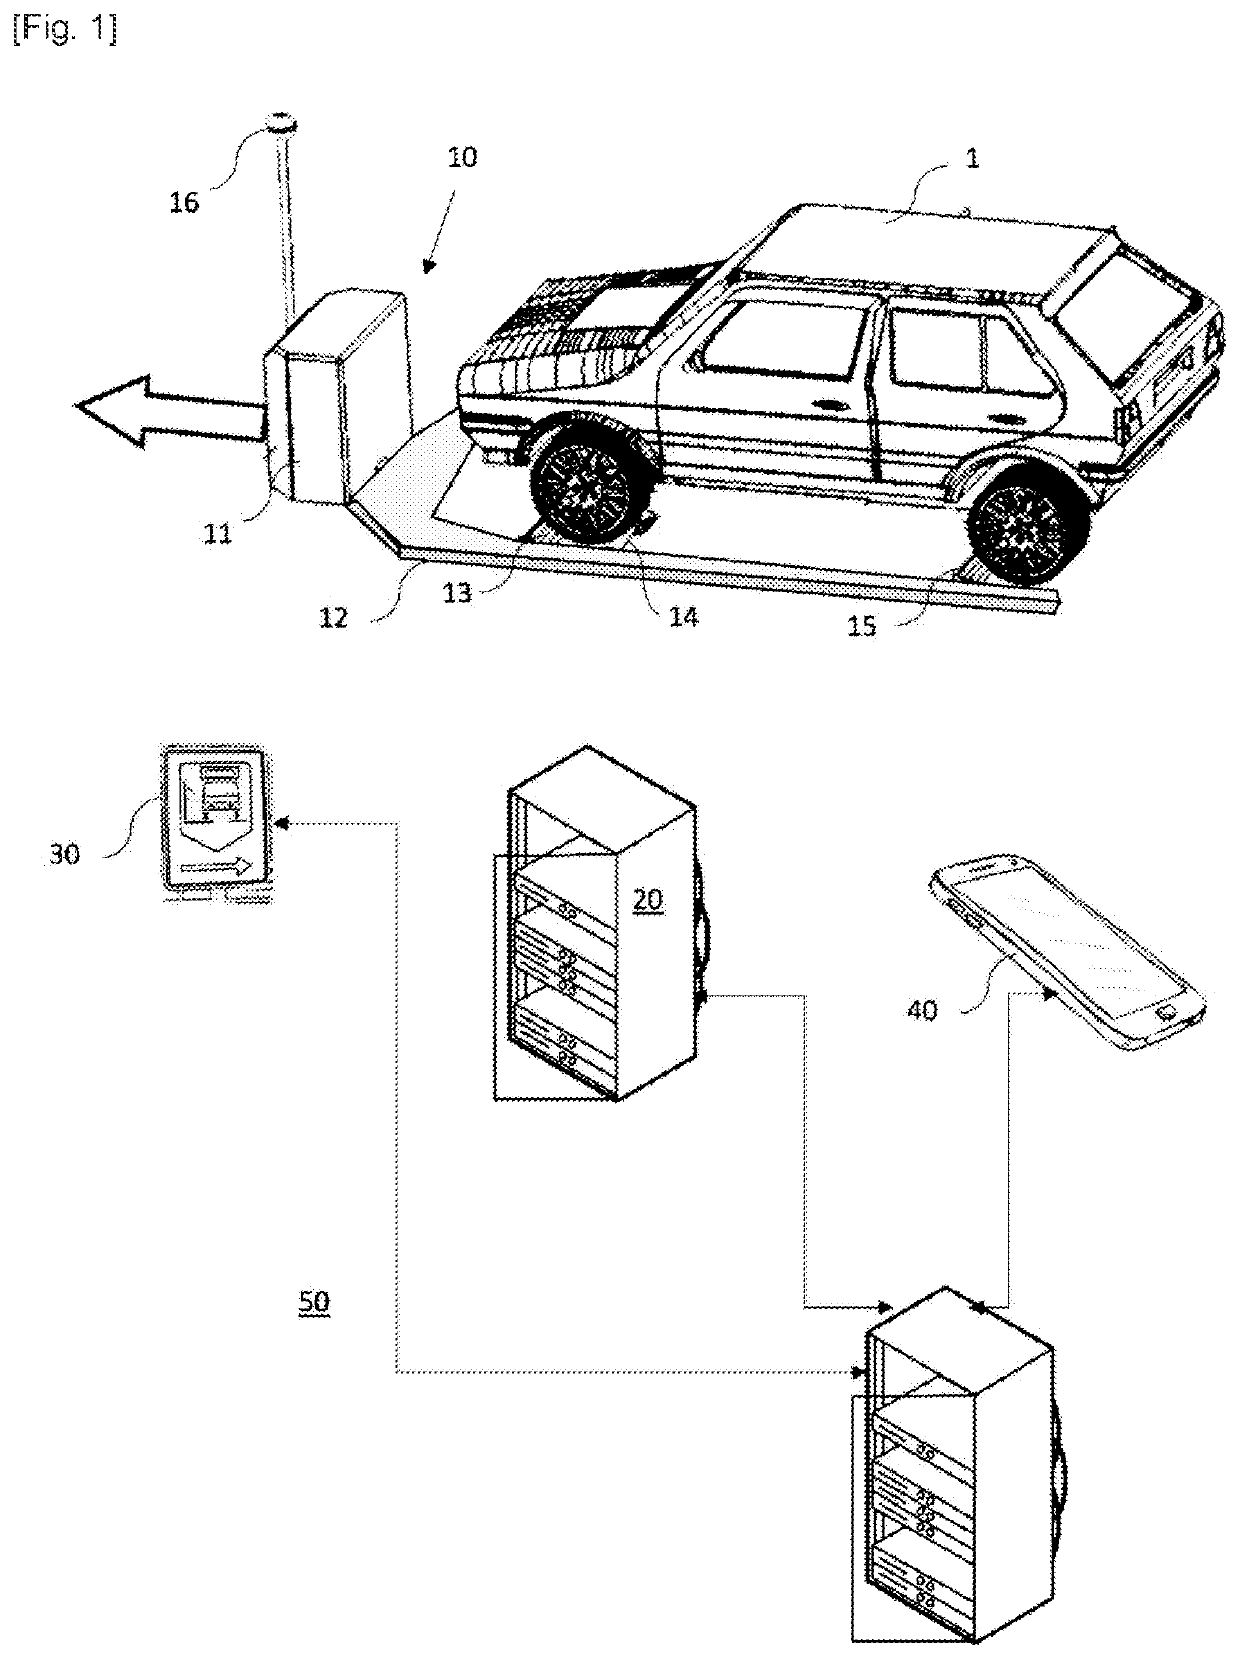 Method for managing a fleet of autonomous parking robots by a supervisor